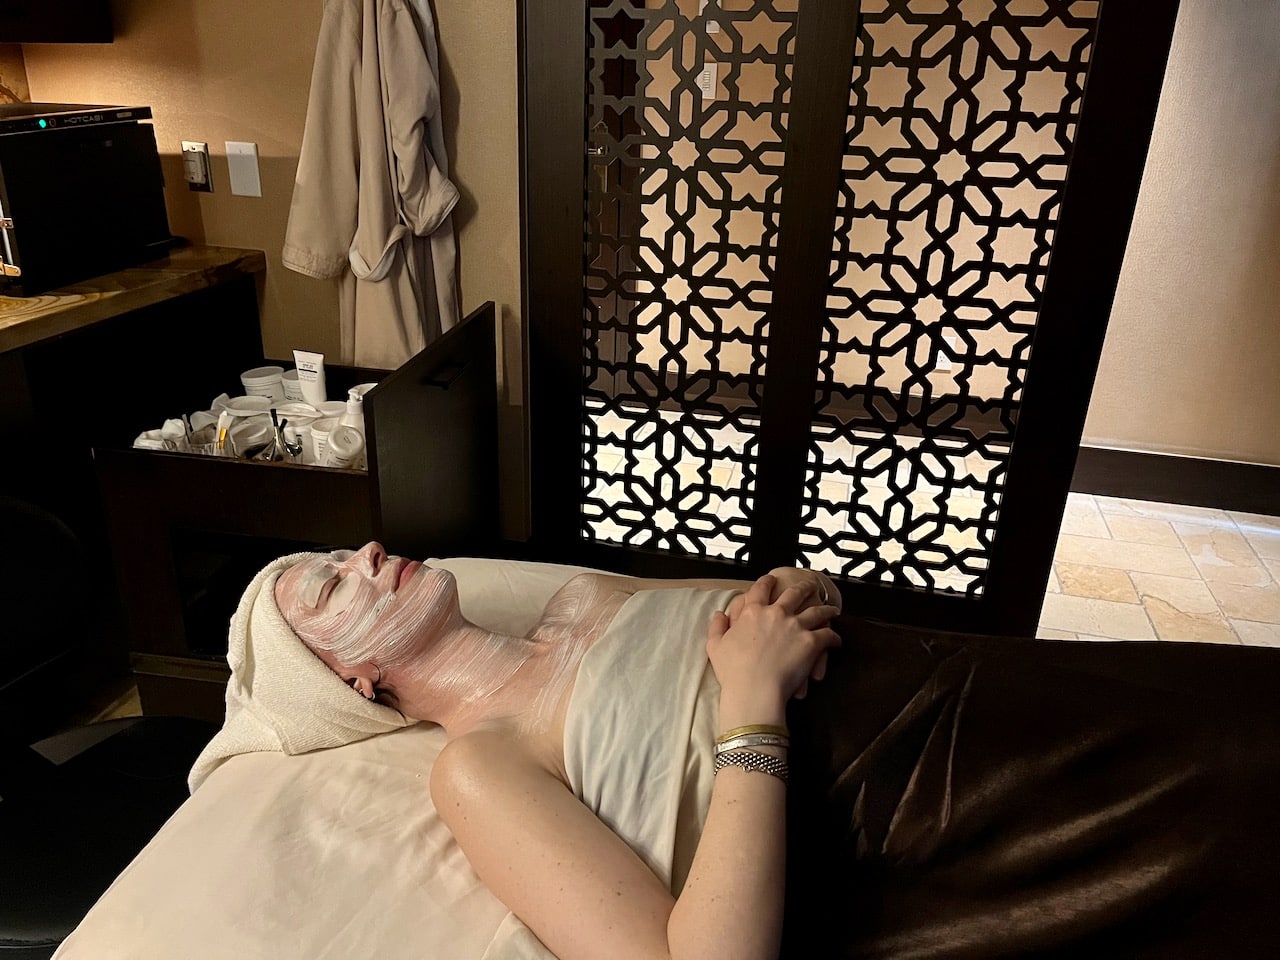 Miraj Hammam Spa's mashrabiya details and post-treatment baklava help make it a top facial destination.